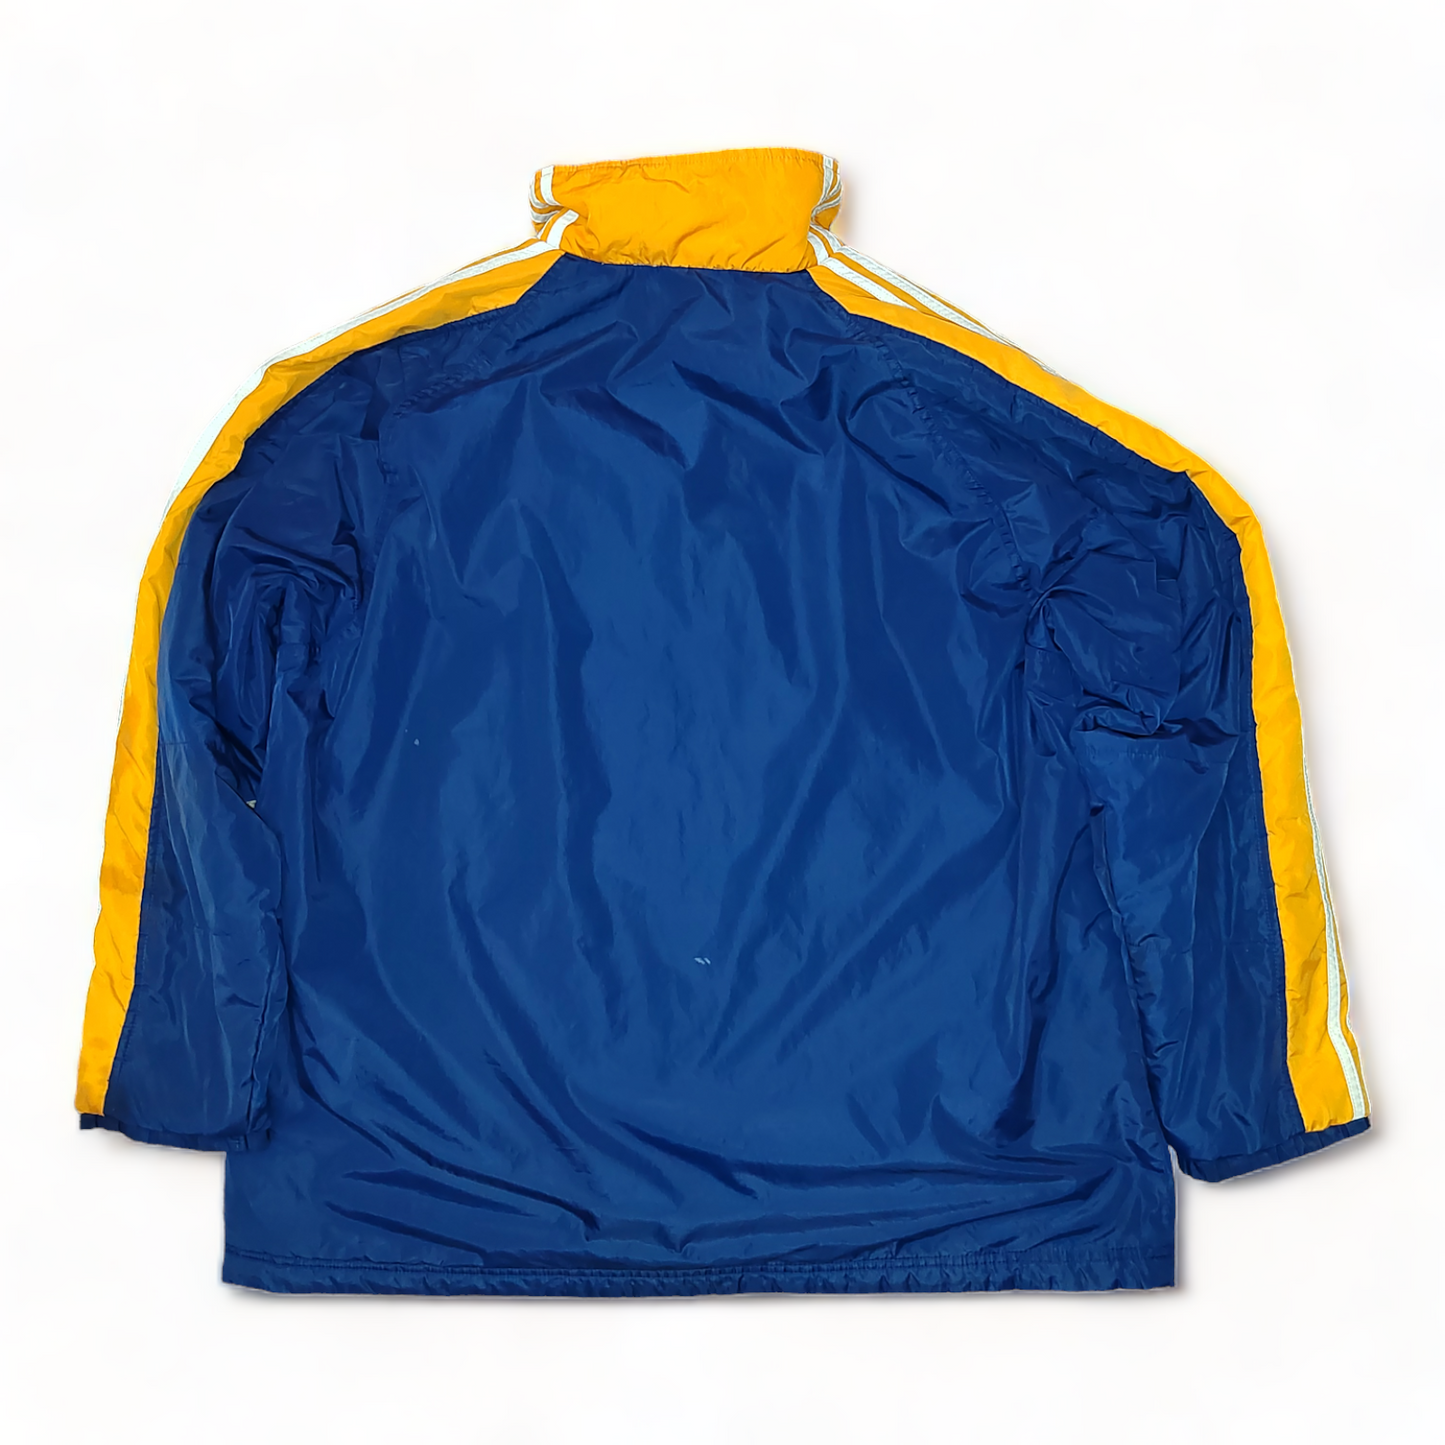 Adidas Jacket Mens XL Blue - Early 00’s – Extra Large